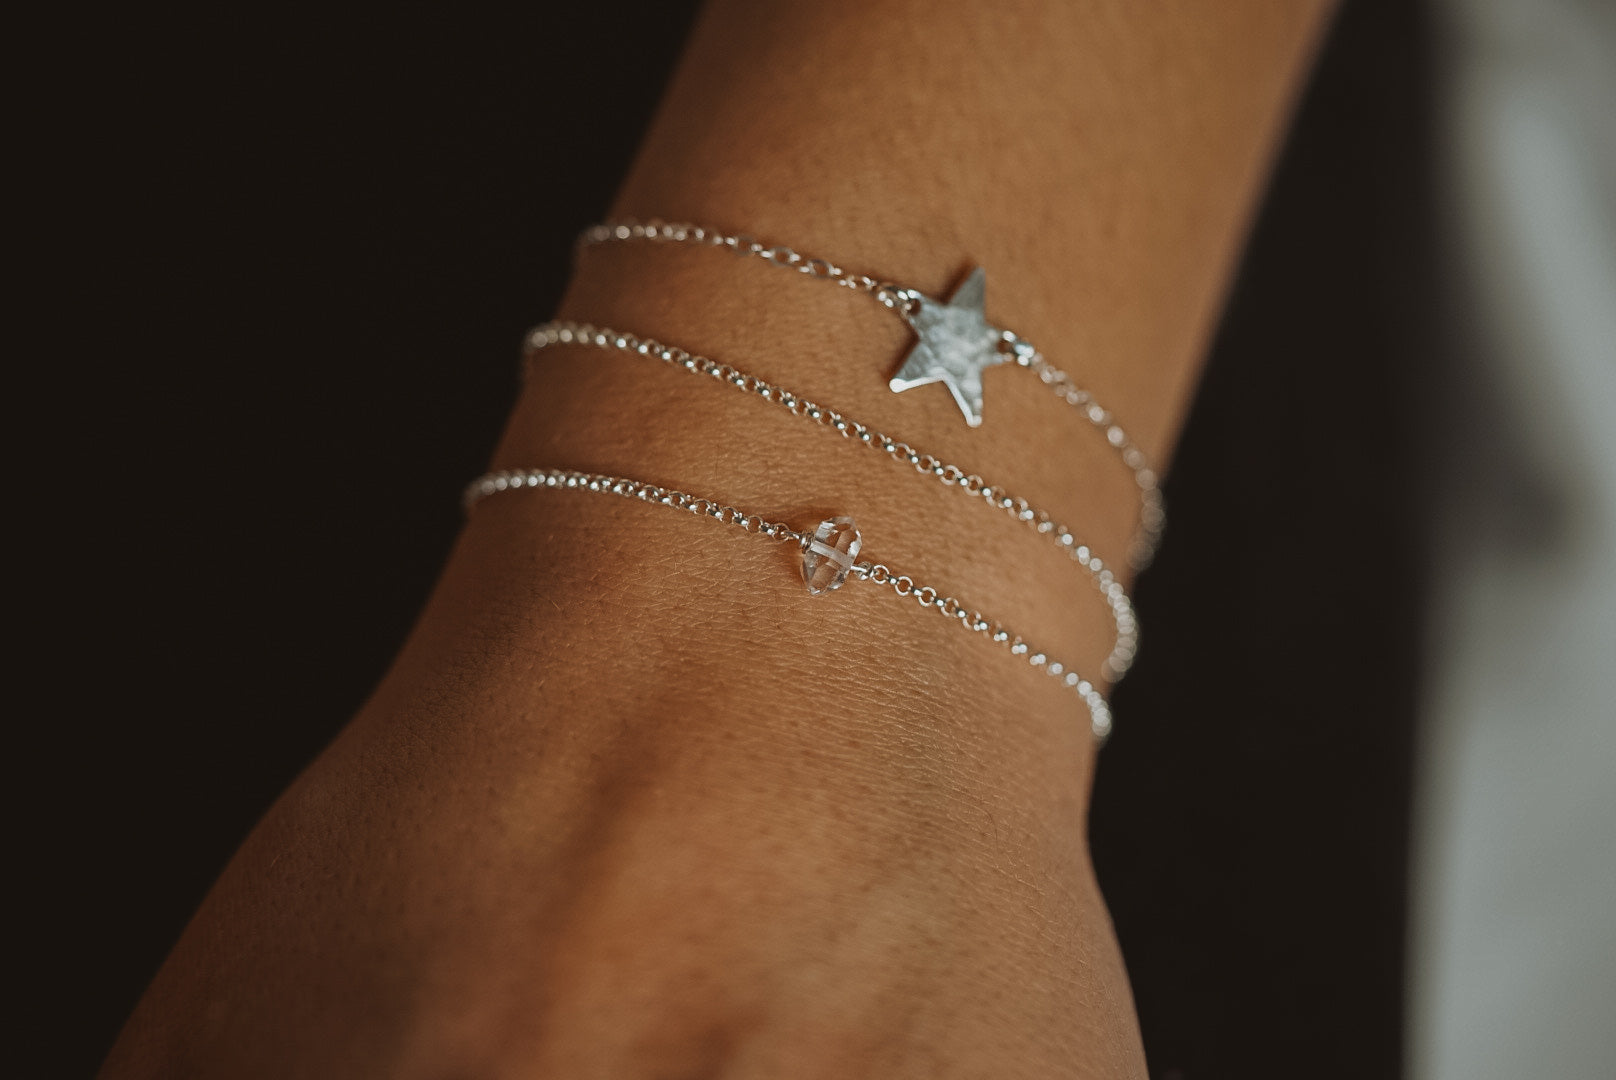 a close up of a wrist wearing a silver chain bracelet, a silver star pendant bracelet and small herkimer diamond bracelet